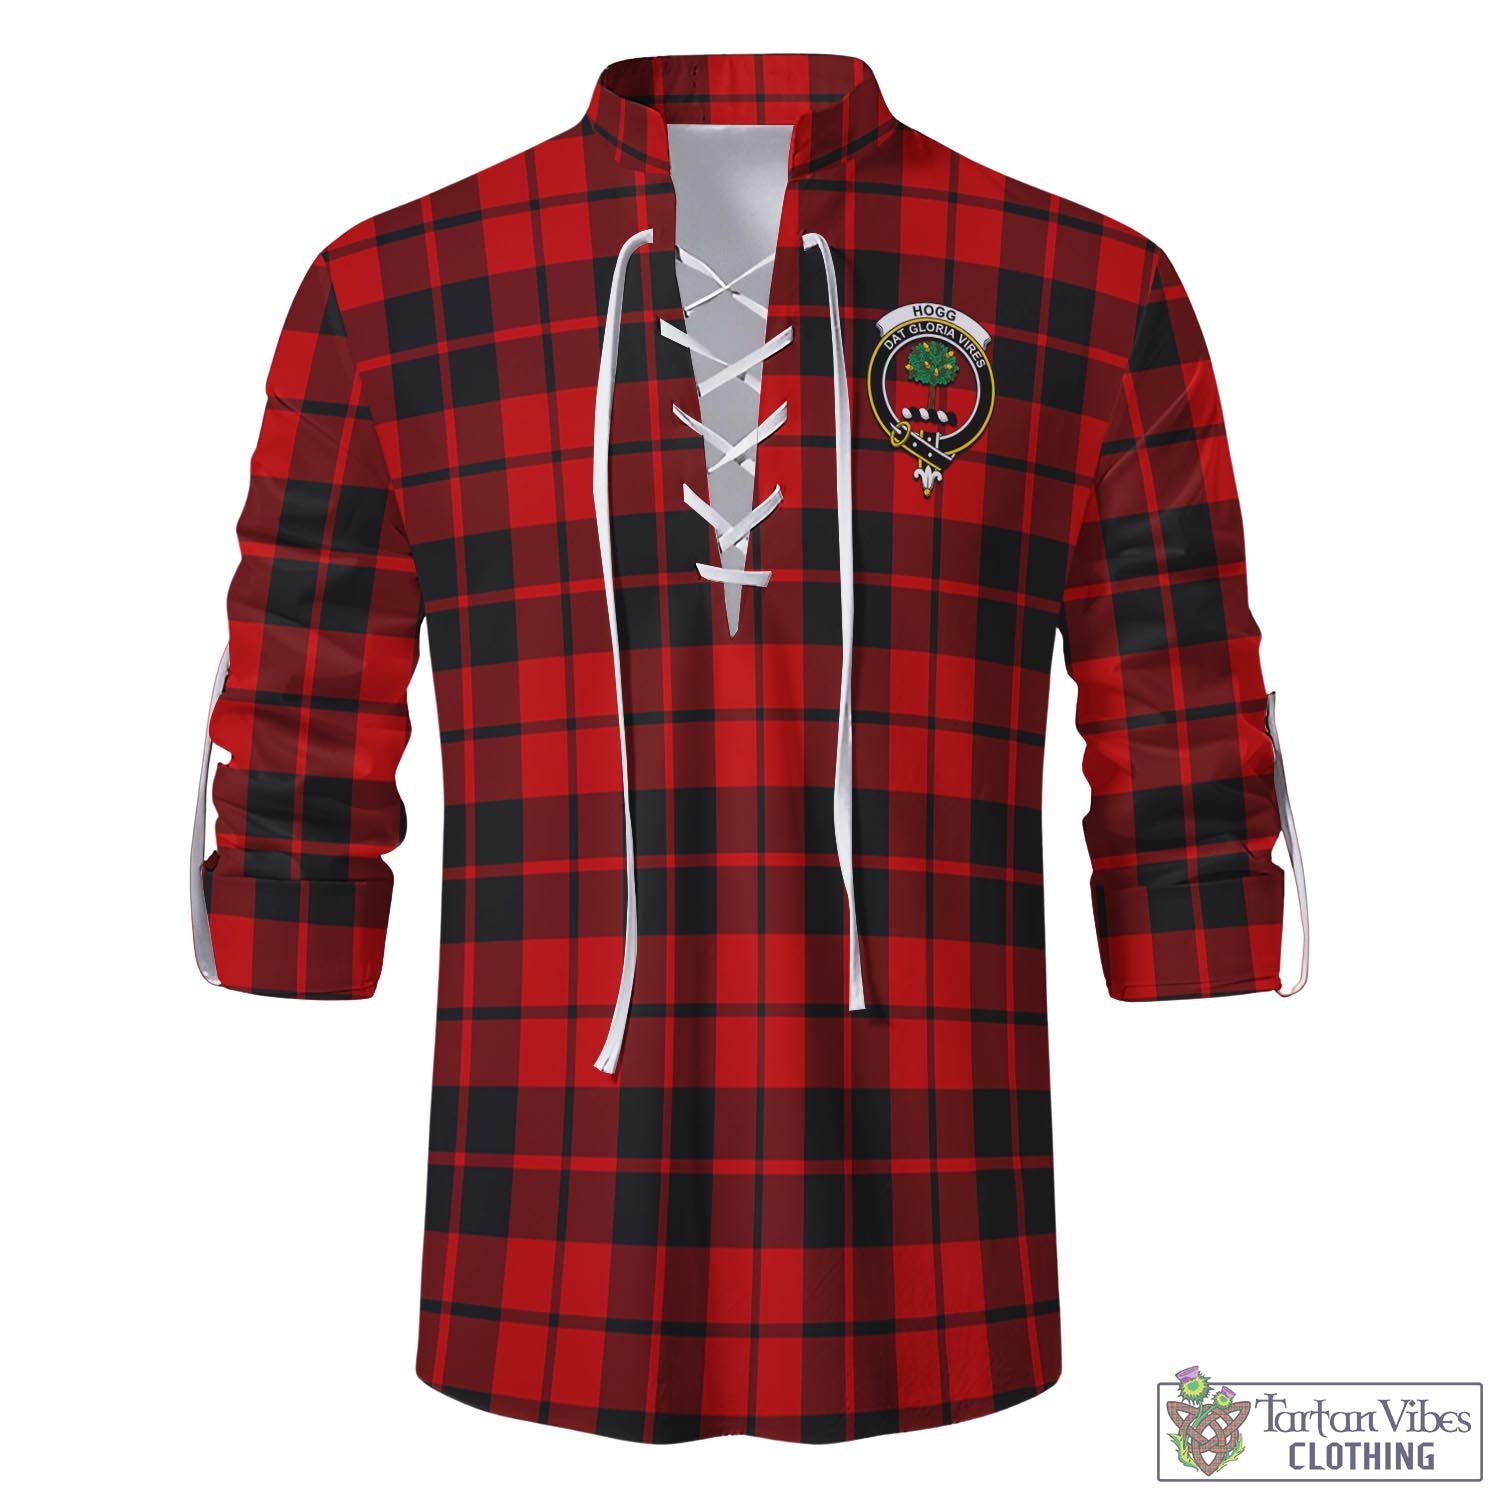 Tartan Vibes Clothing Hogg Tartan Men's Scottish Traditional Jacobite Ghillie Kilt Shirt with Family Crest